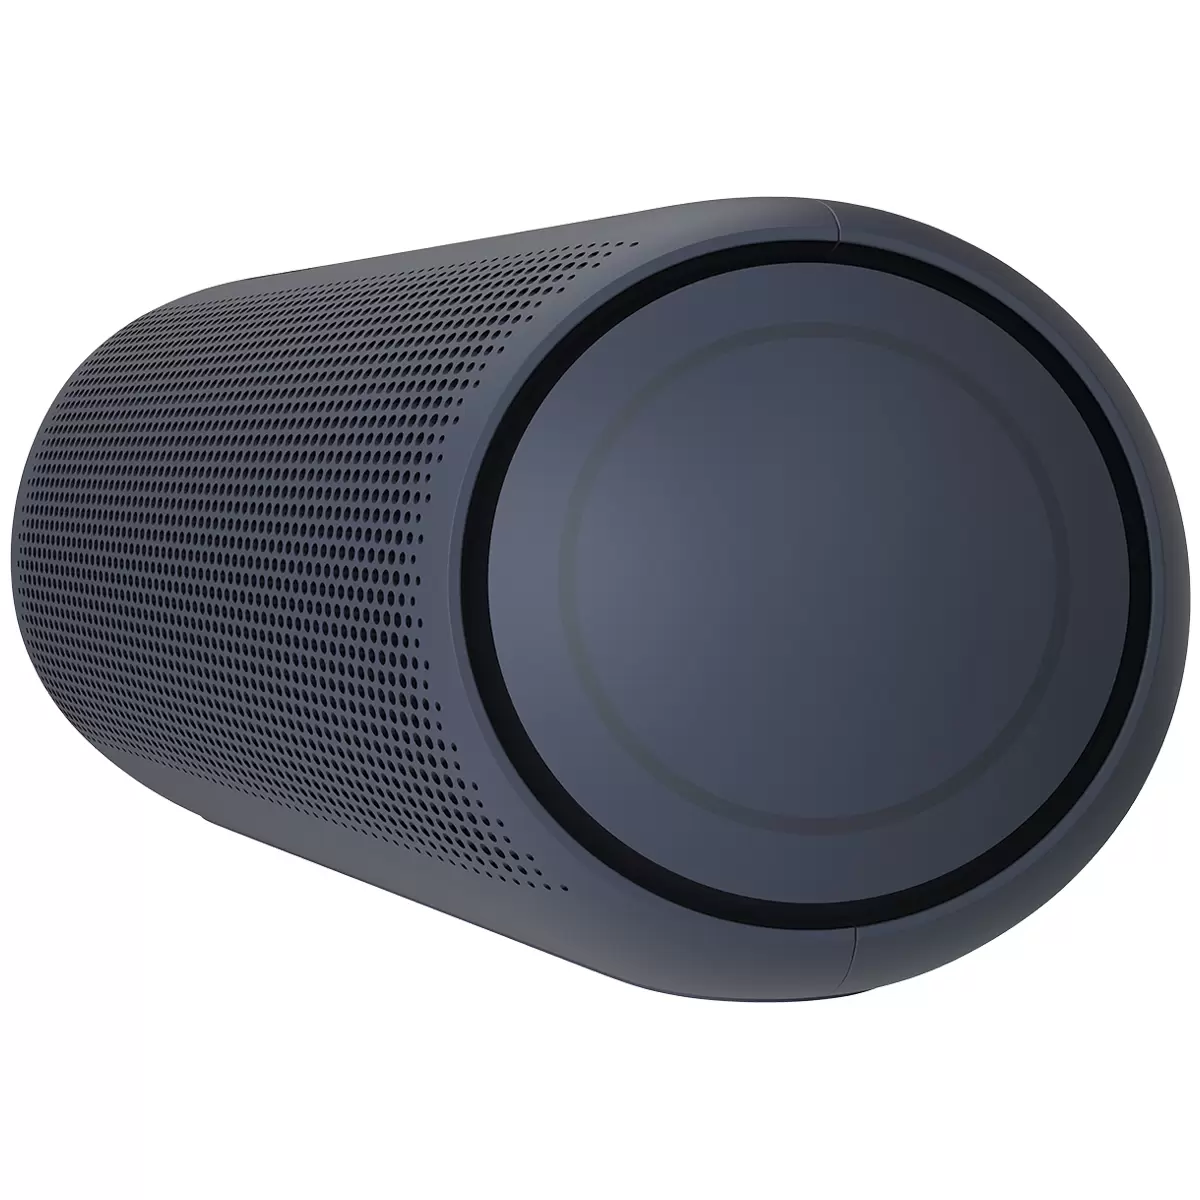 LG XBOOM Go Portable Bluetooth Speaker PL7